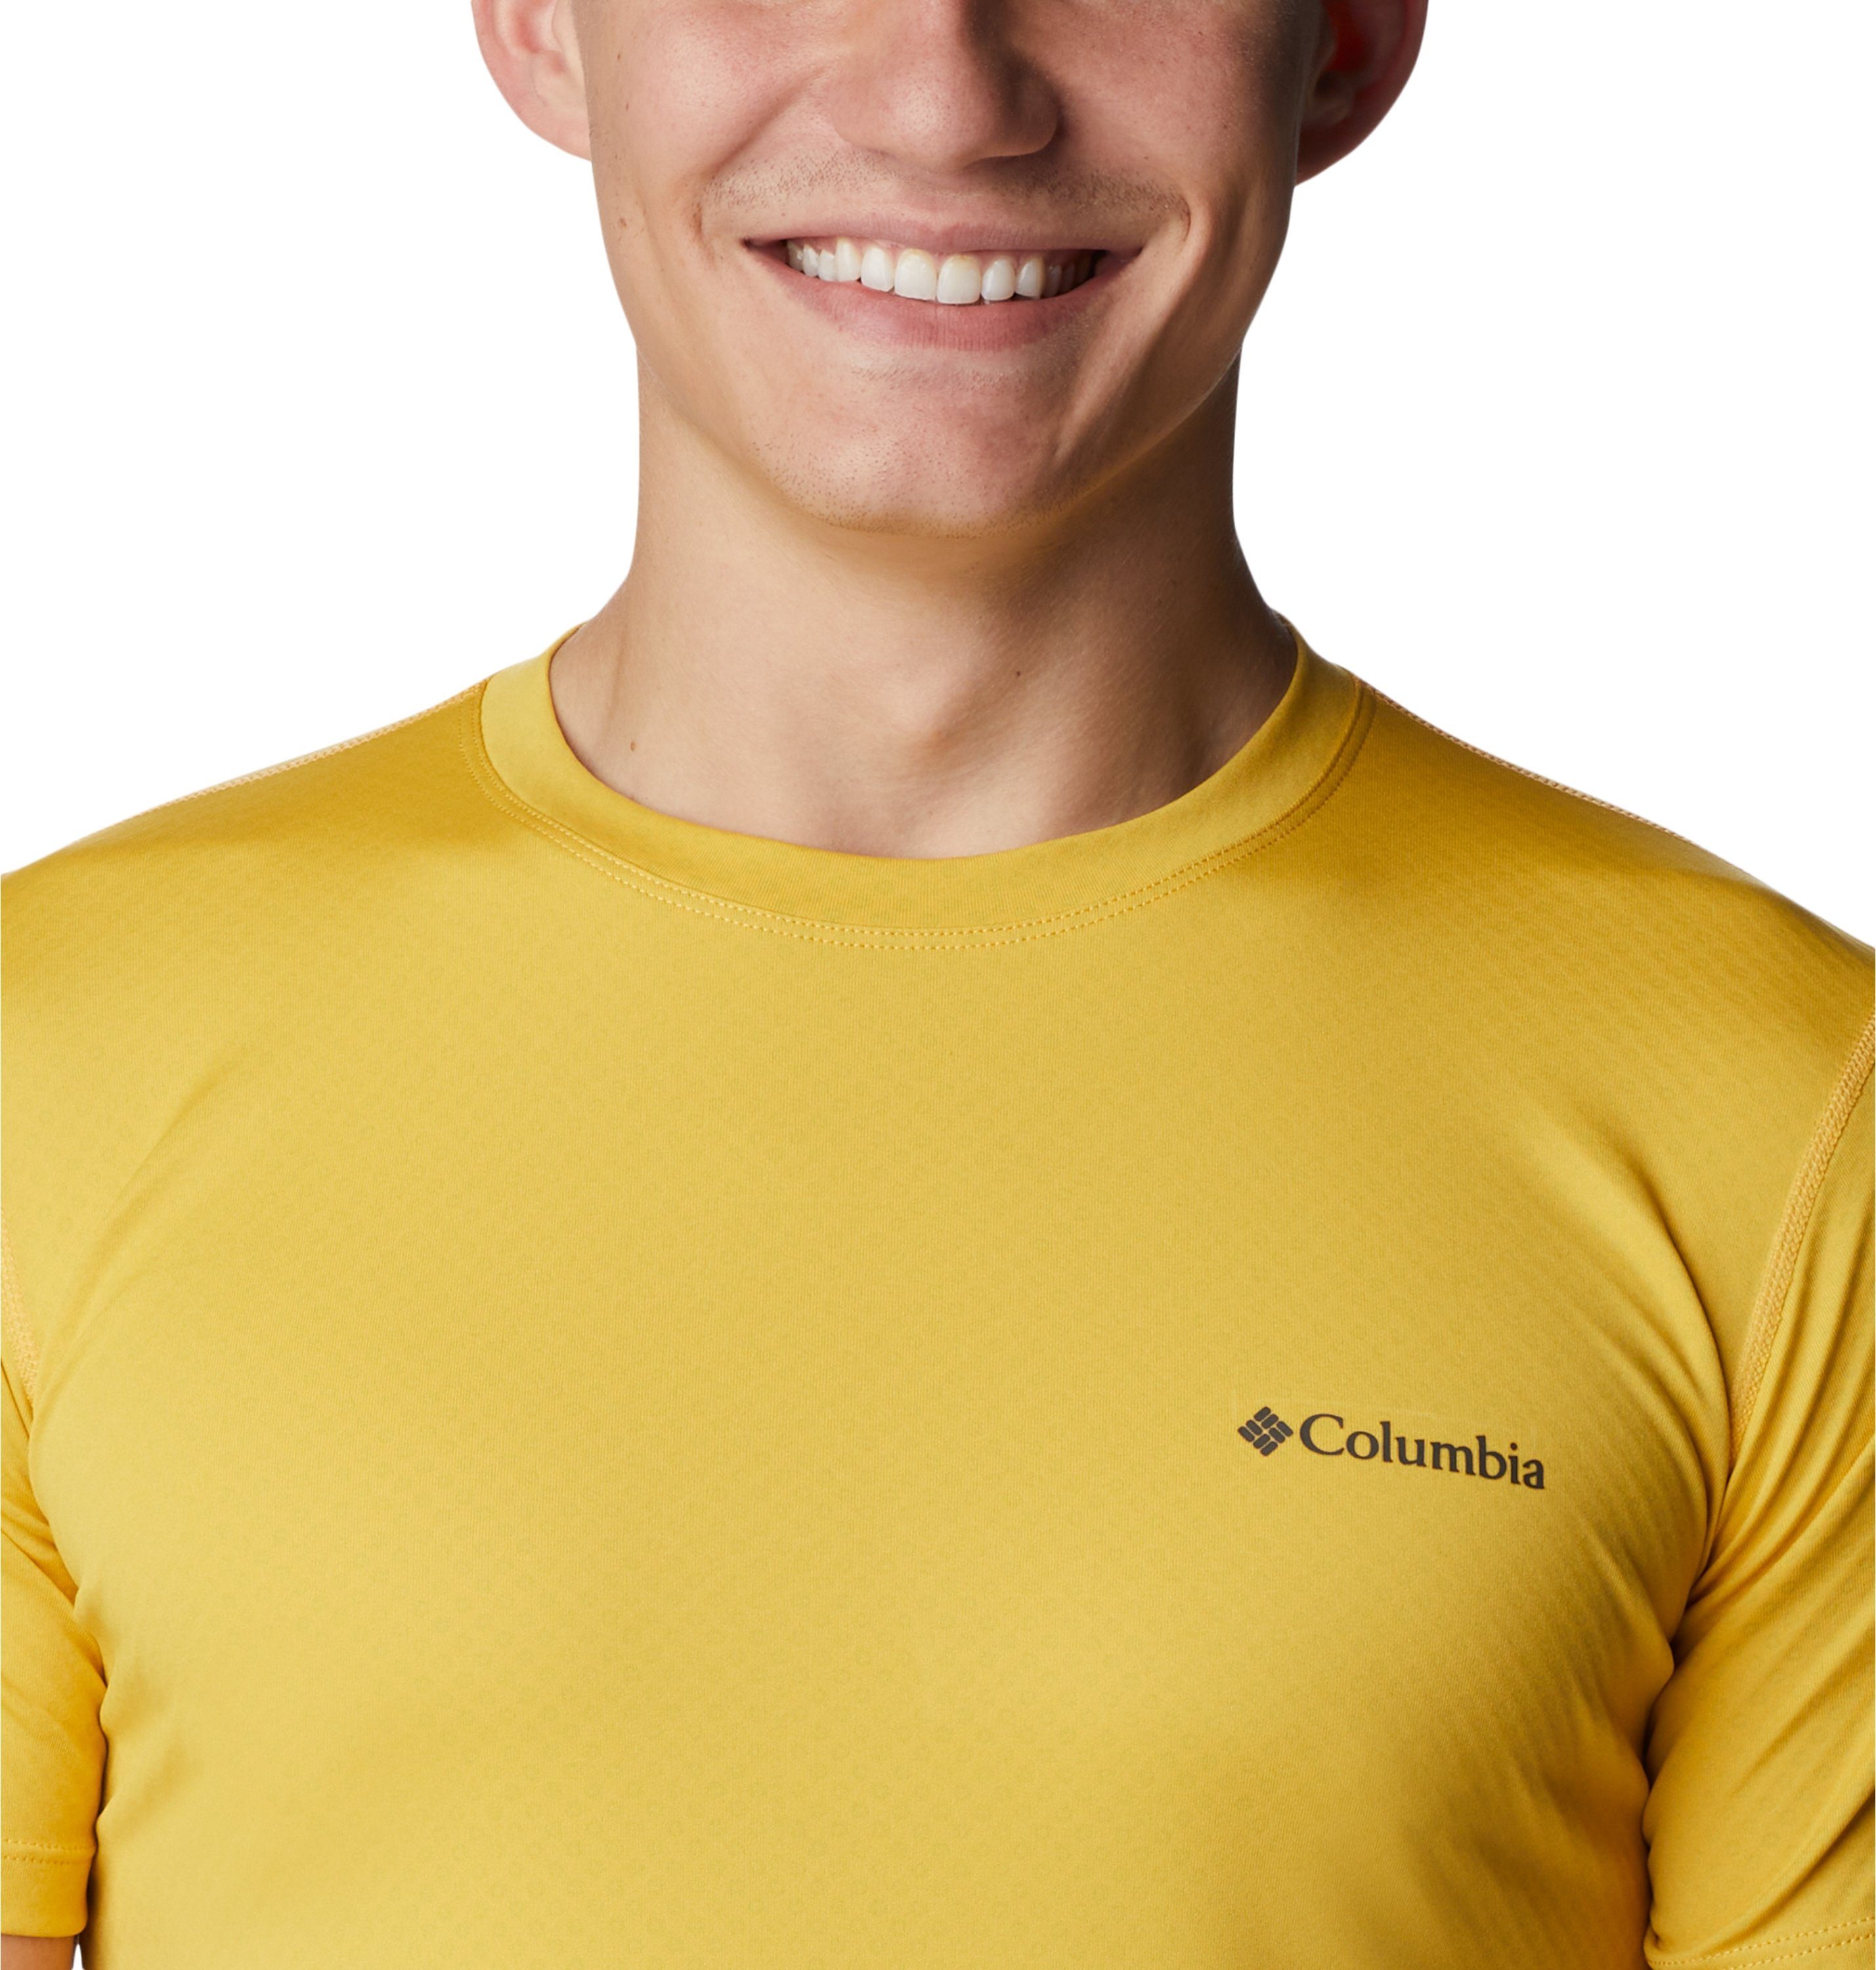 Columbia T-Shirt Columbia Sleeve Golden Zero Rules Nugget, Ancient Fossil Shirt Short Herren